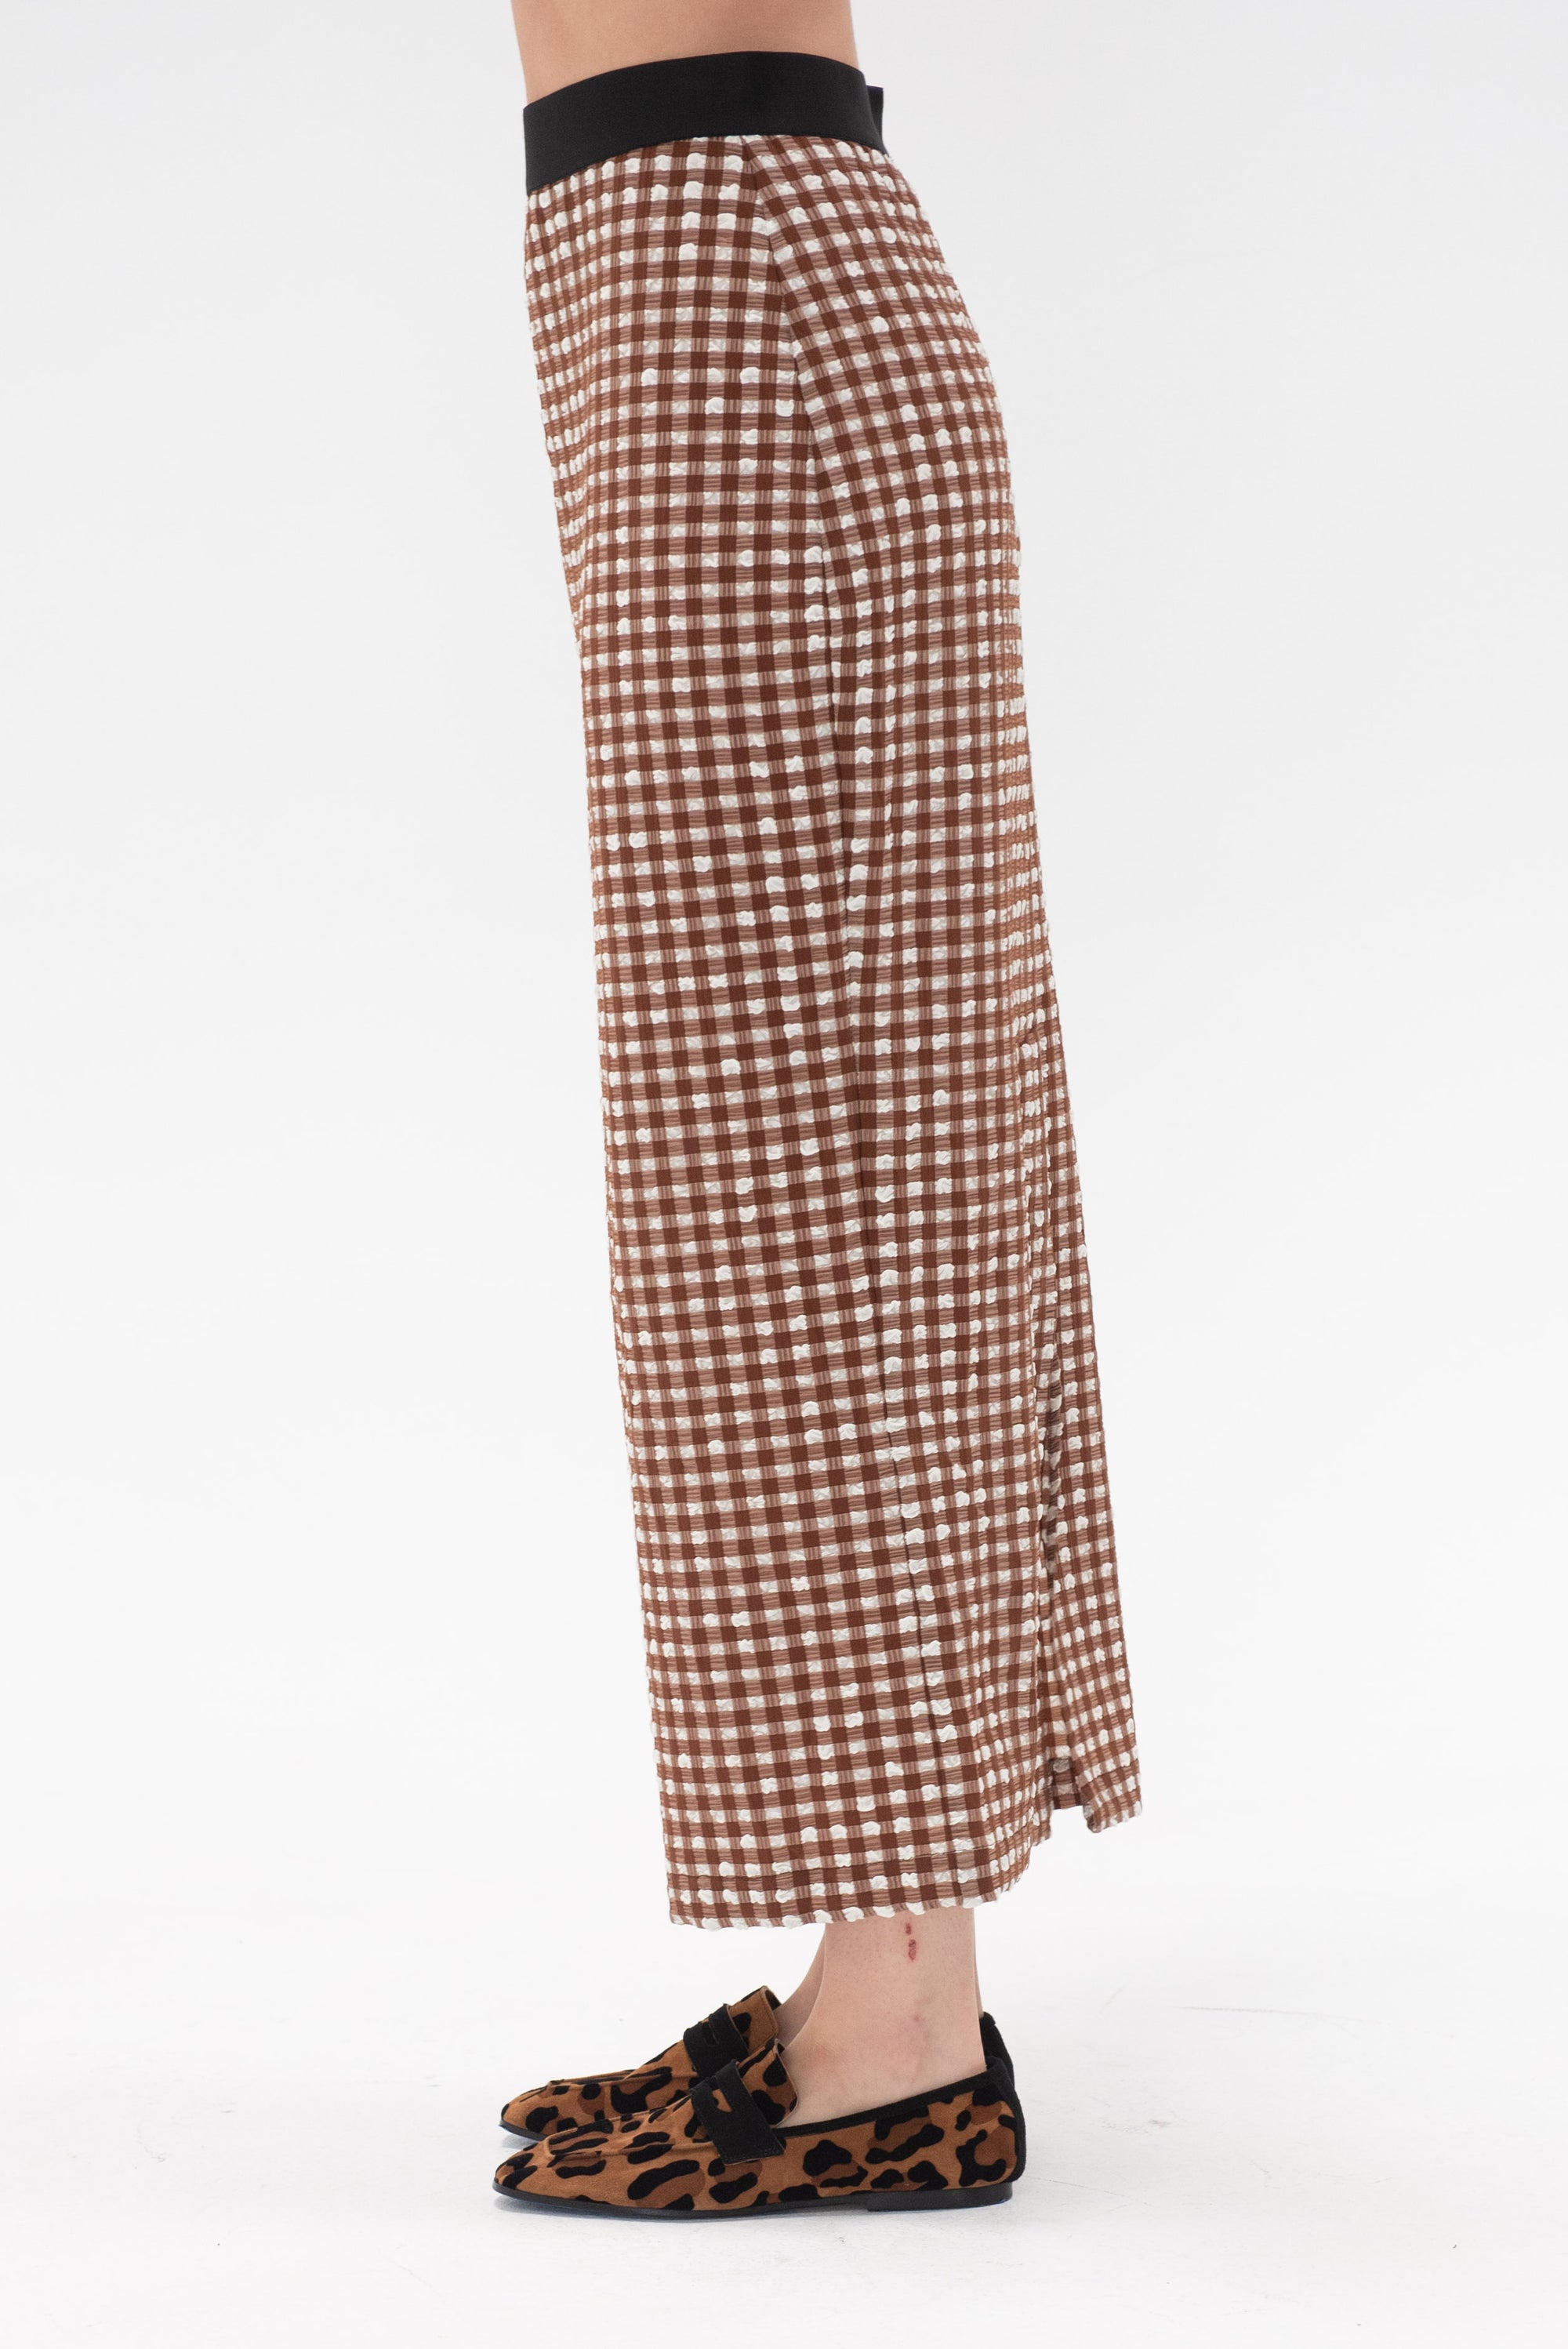 Rachel Comey - Native Skirt, Brown Check